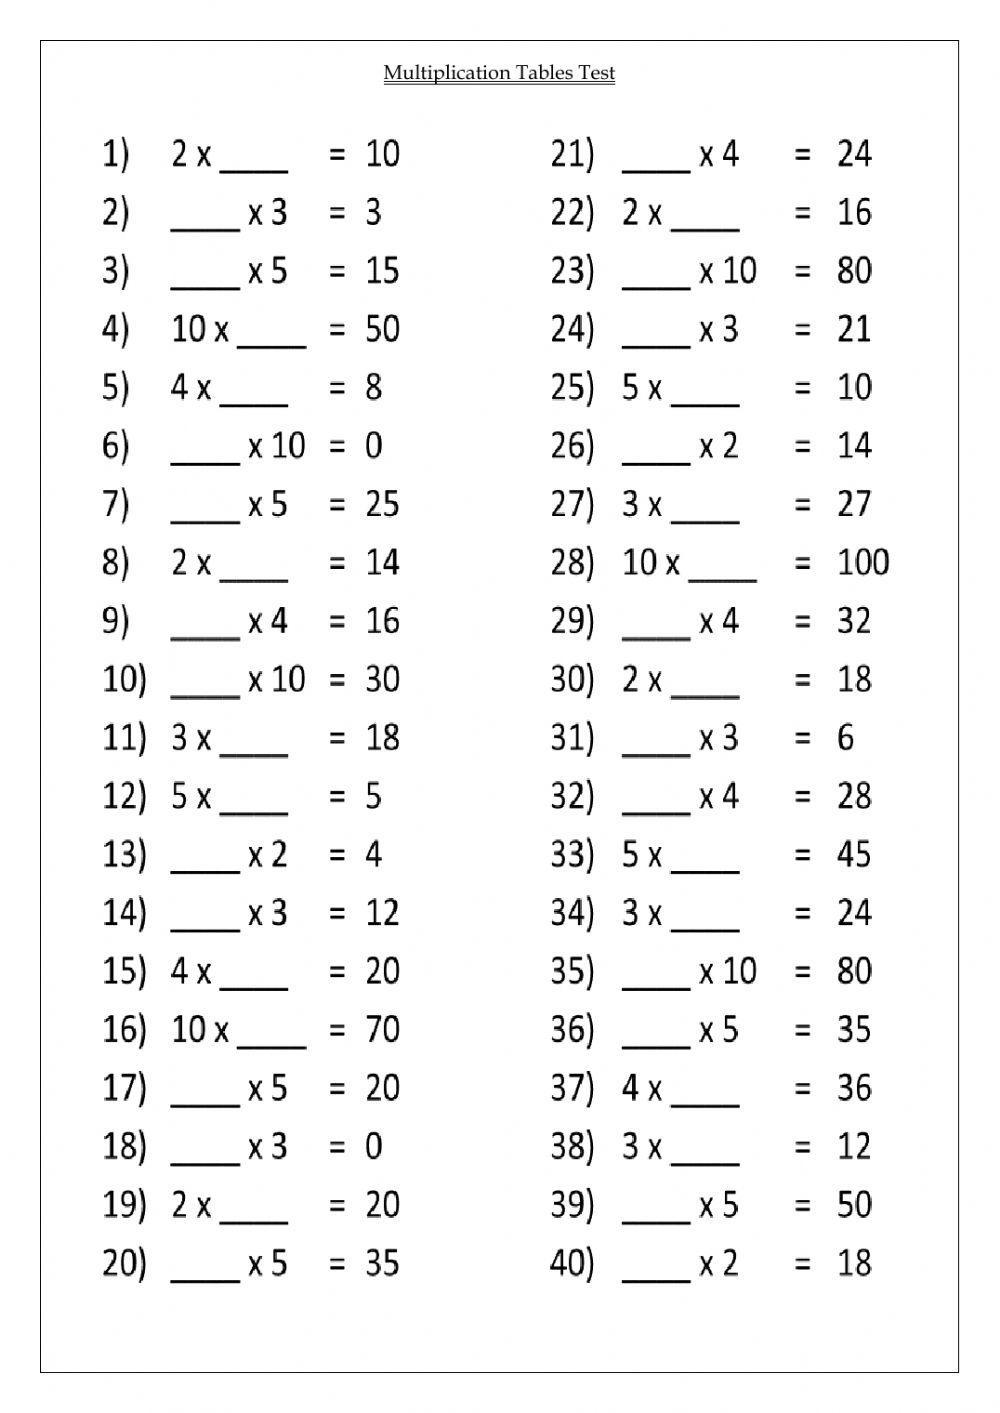 Multiplication Tables Test